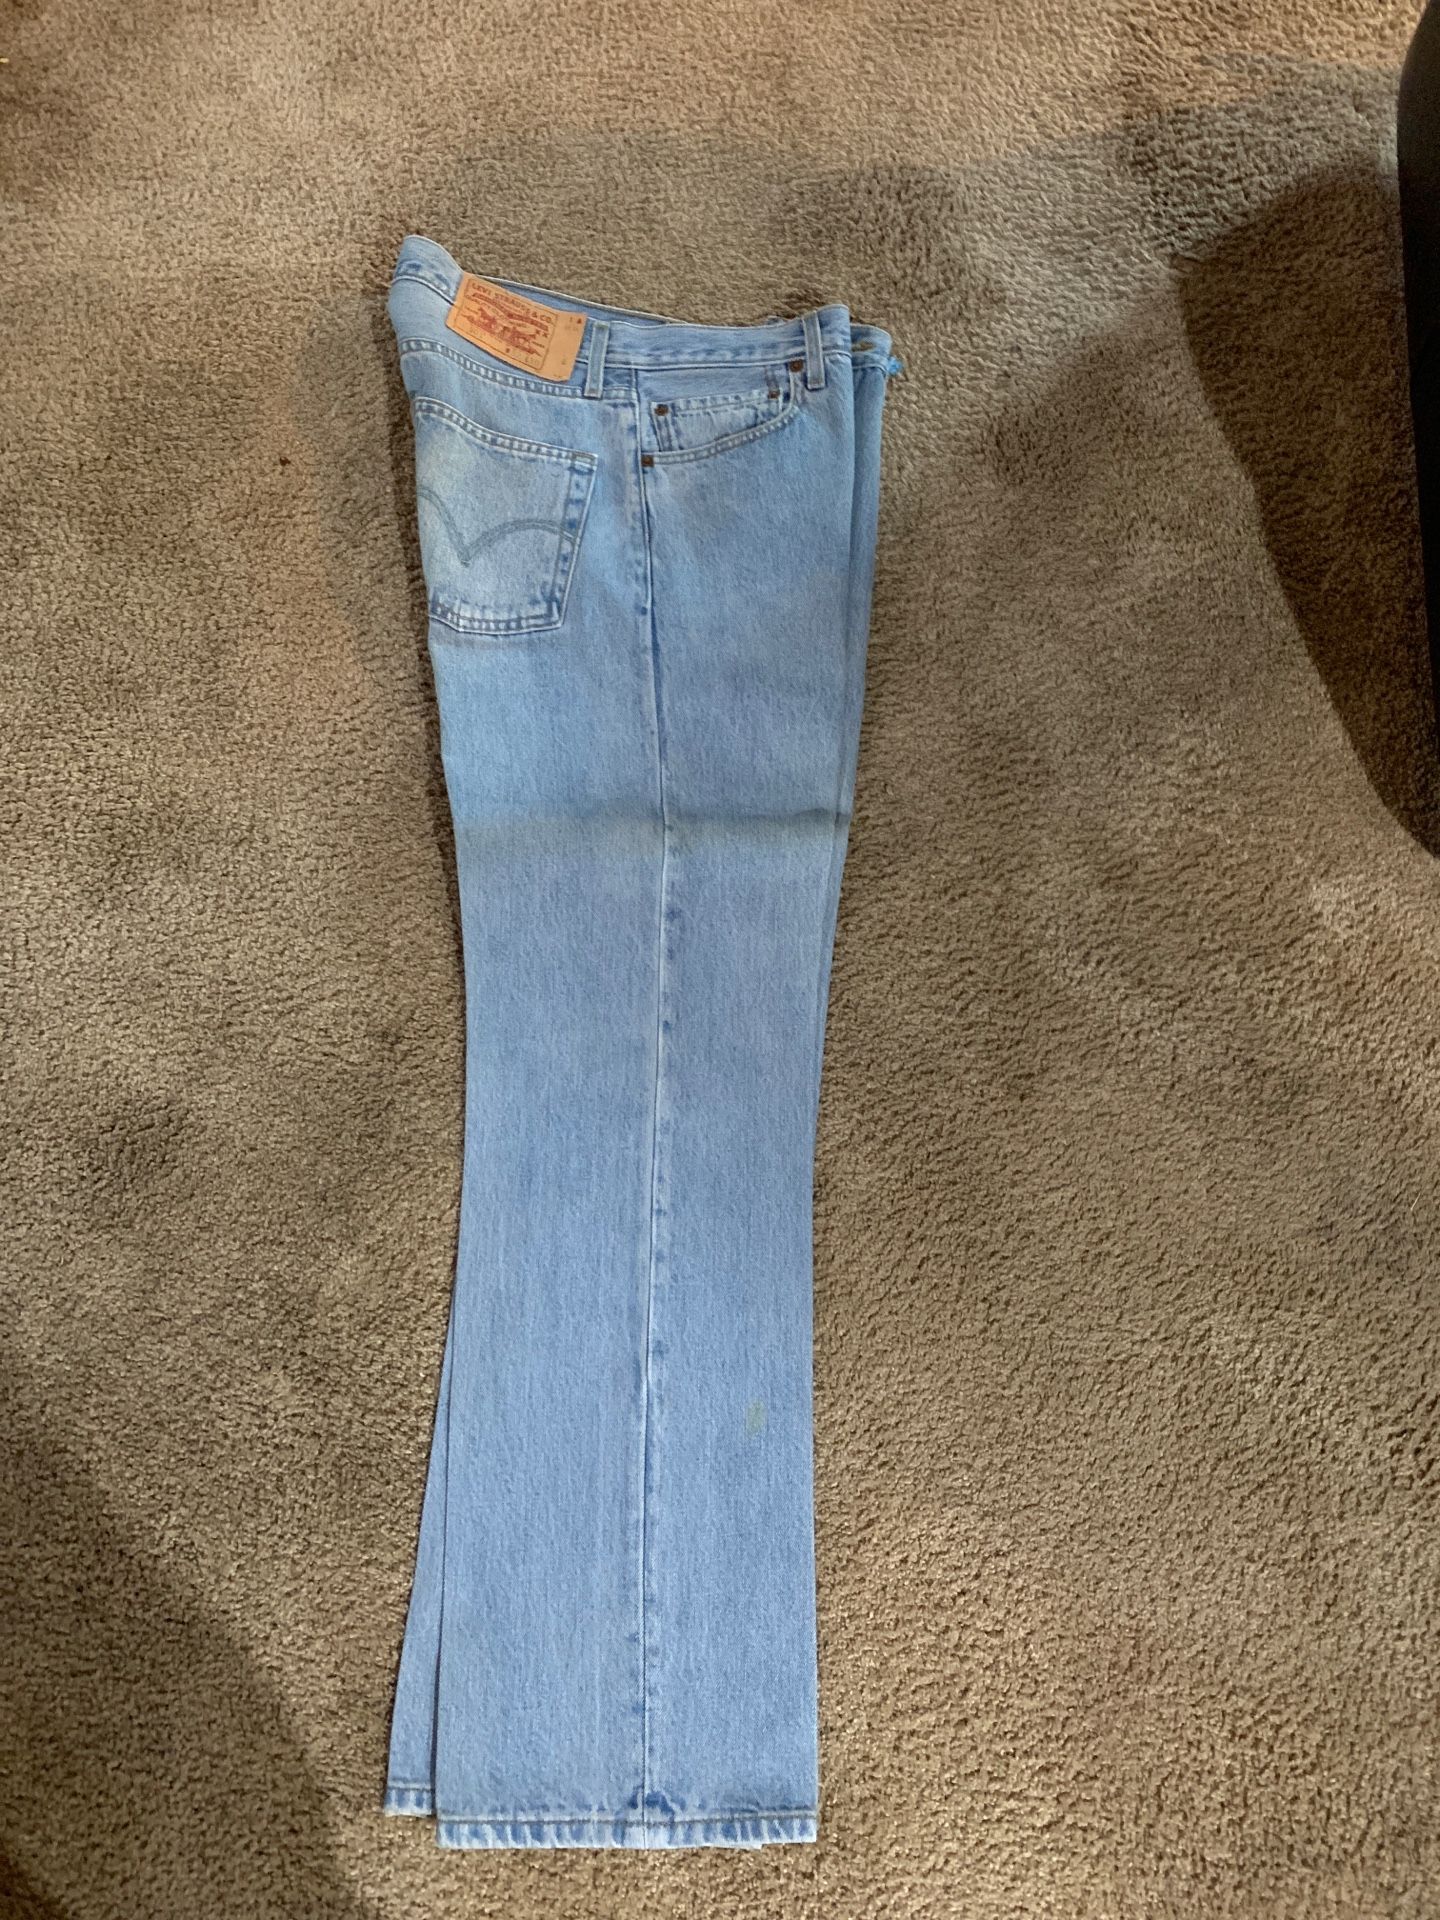 Levi’s denim jeans men’s Waist 32 length 30